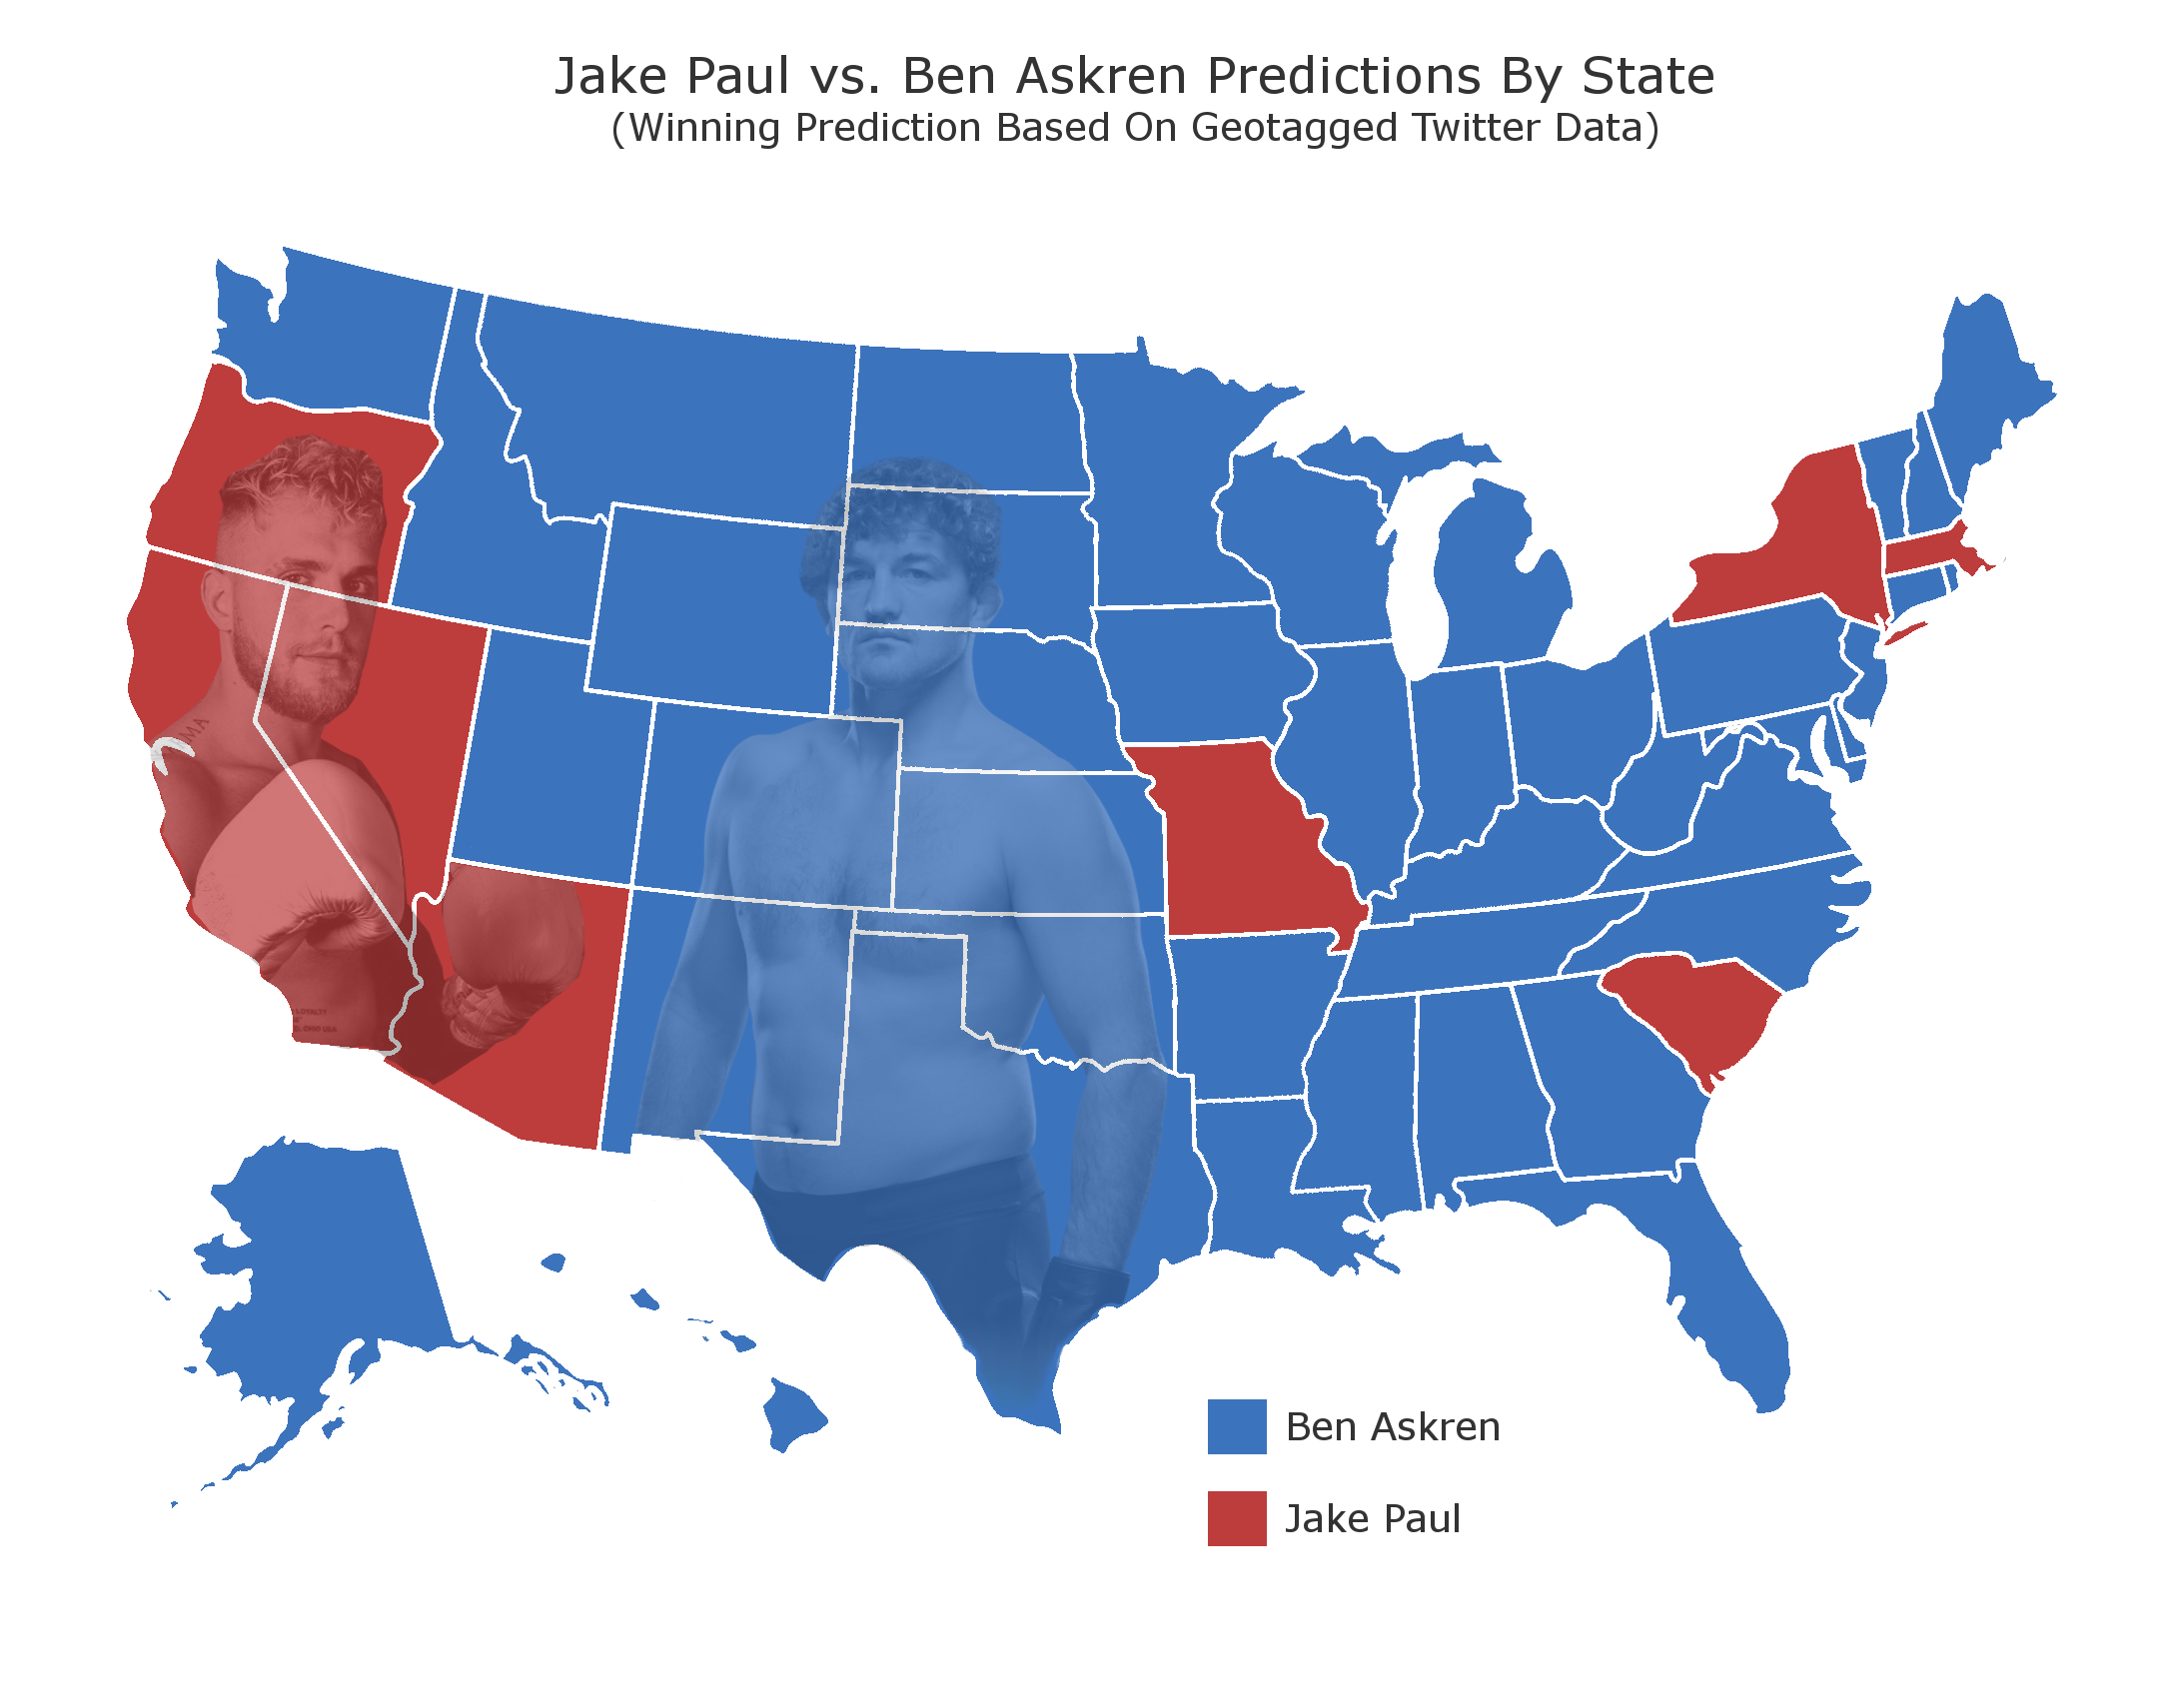 Jake Paul, Ben Askren Map (Credit: casinoinsider.com)